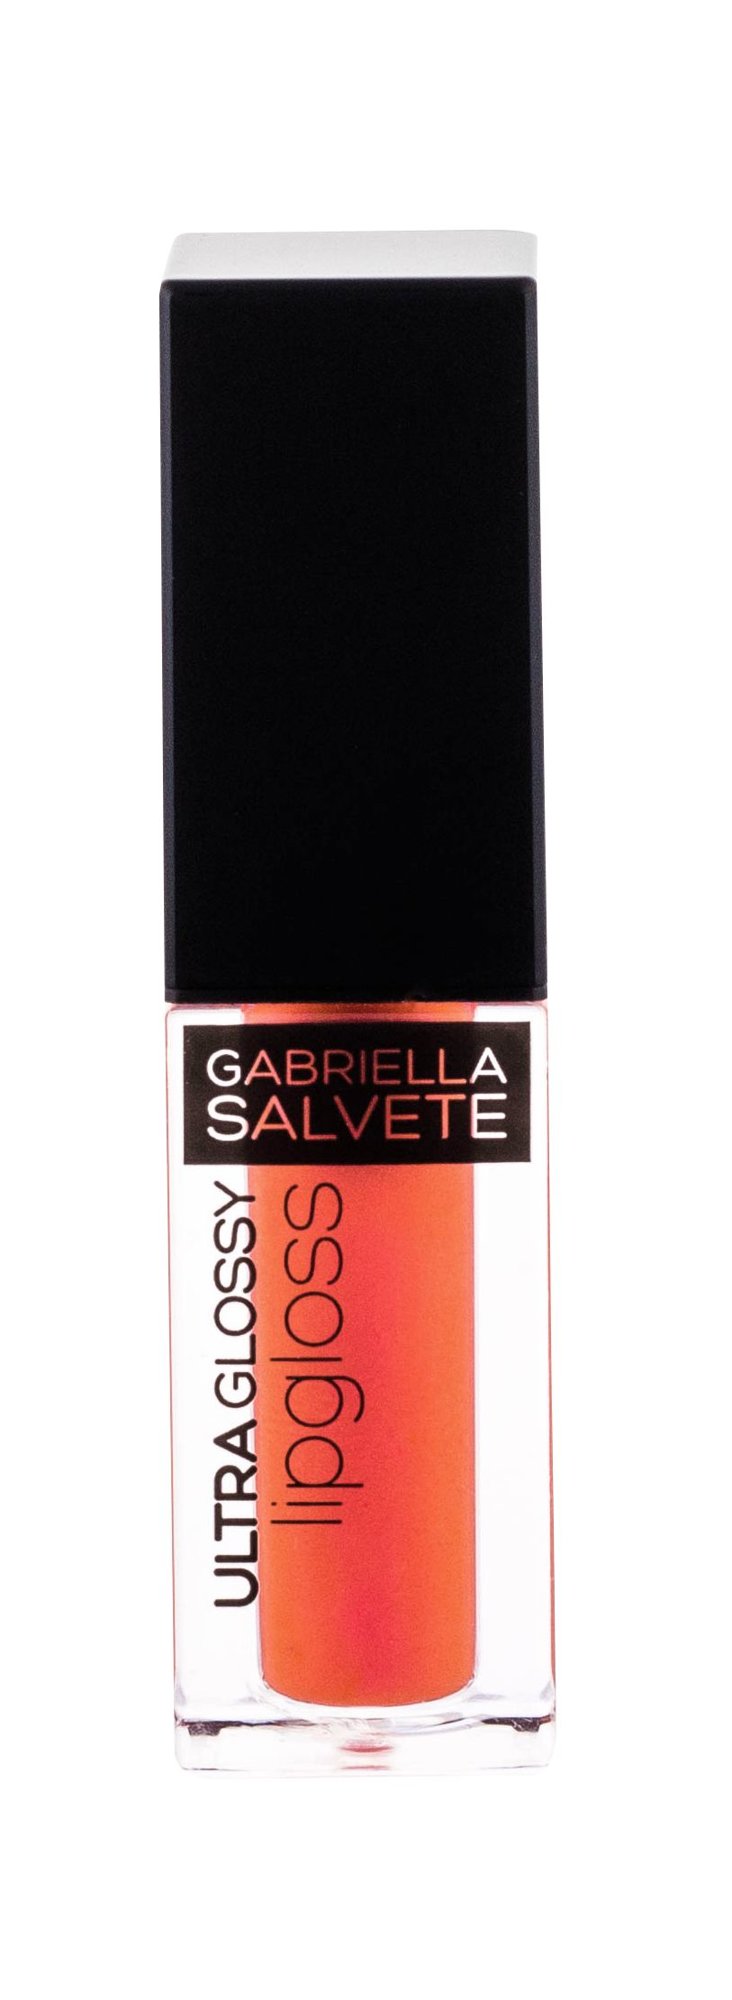 Gabriella Salvete Ultra Glossy lūpų blizgesys